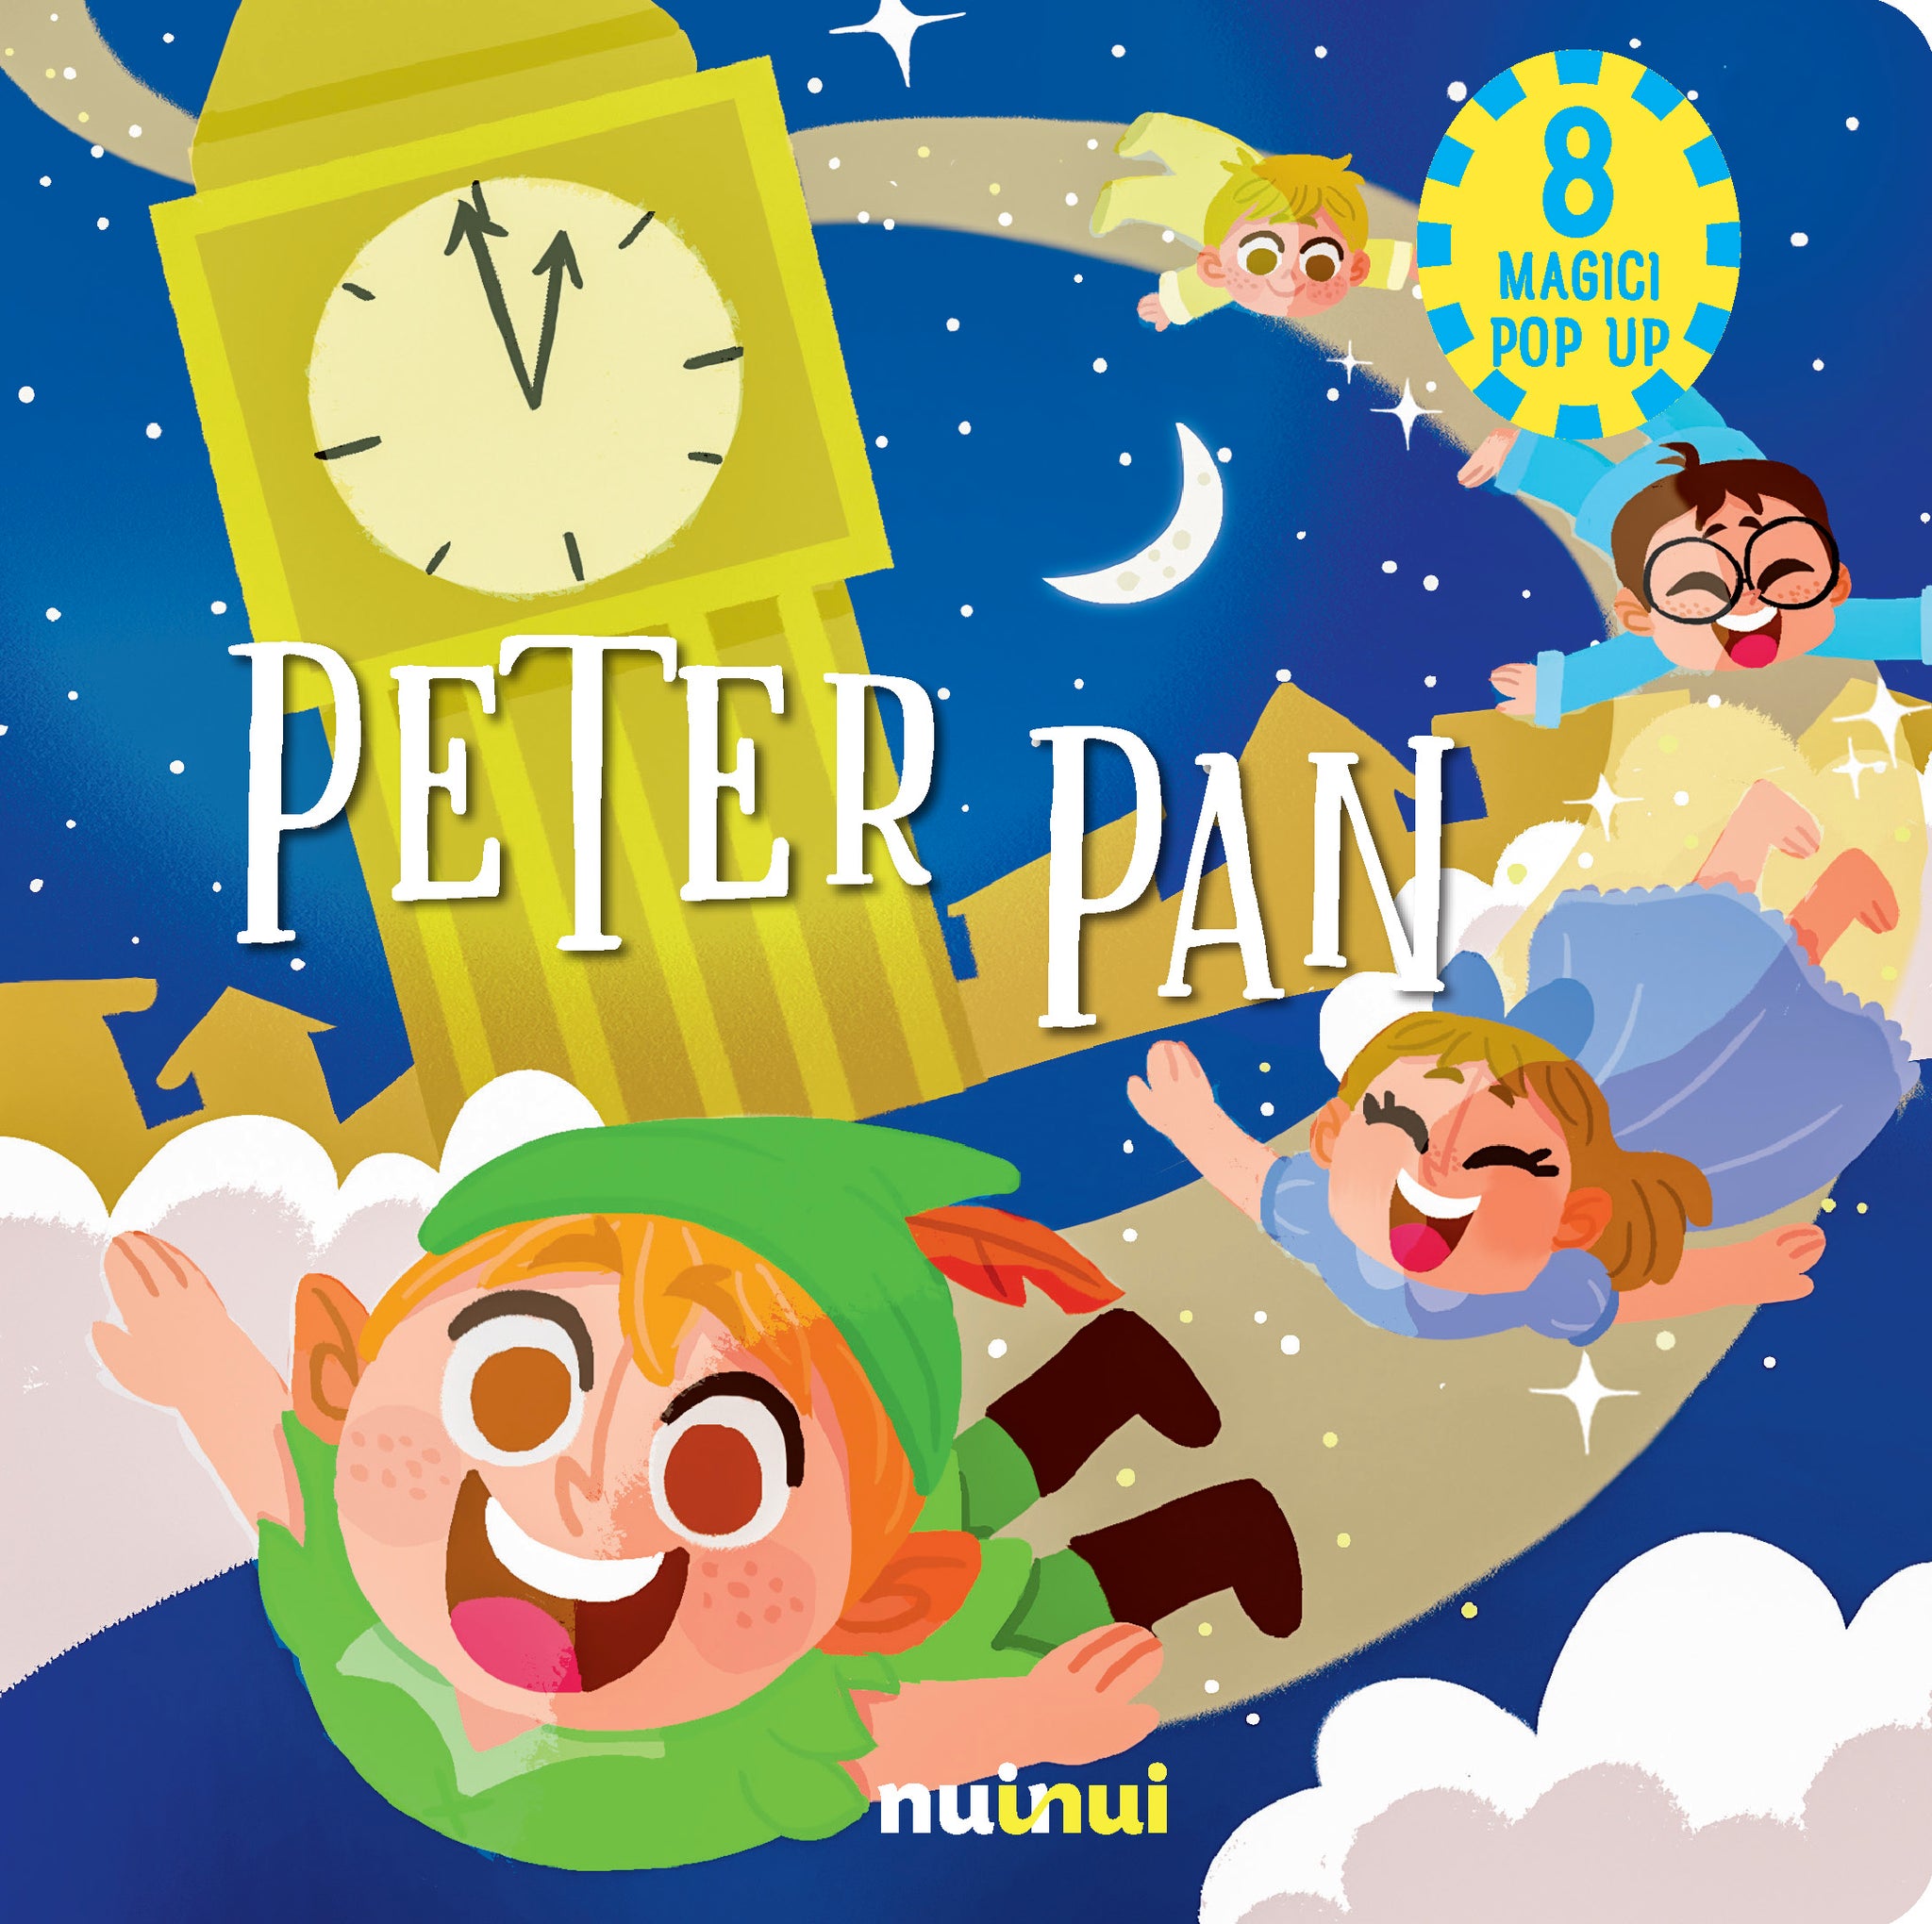 Pop up fairy tales - Peter Pan